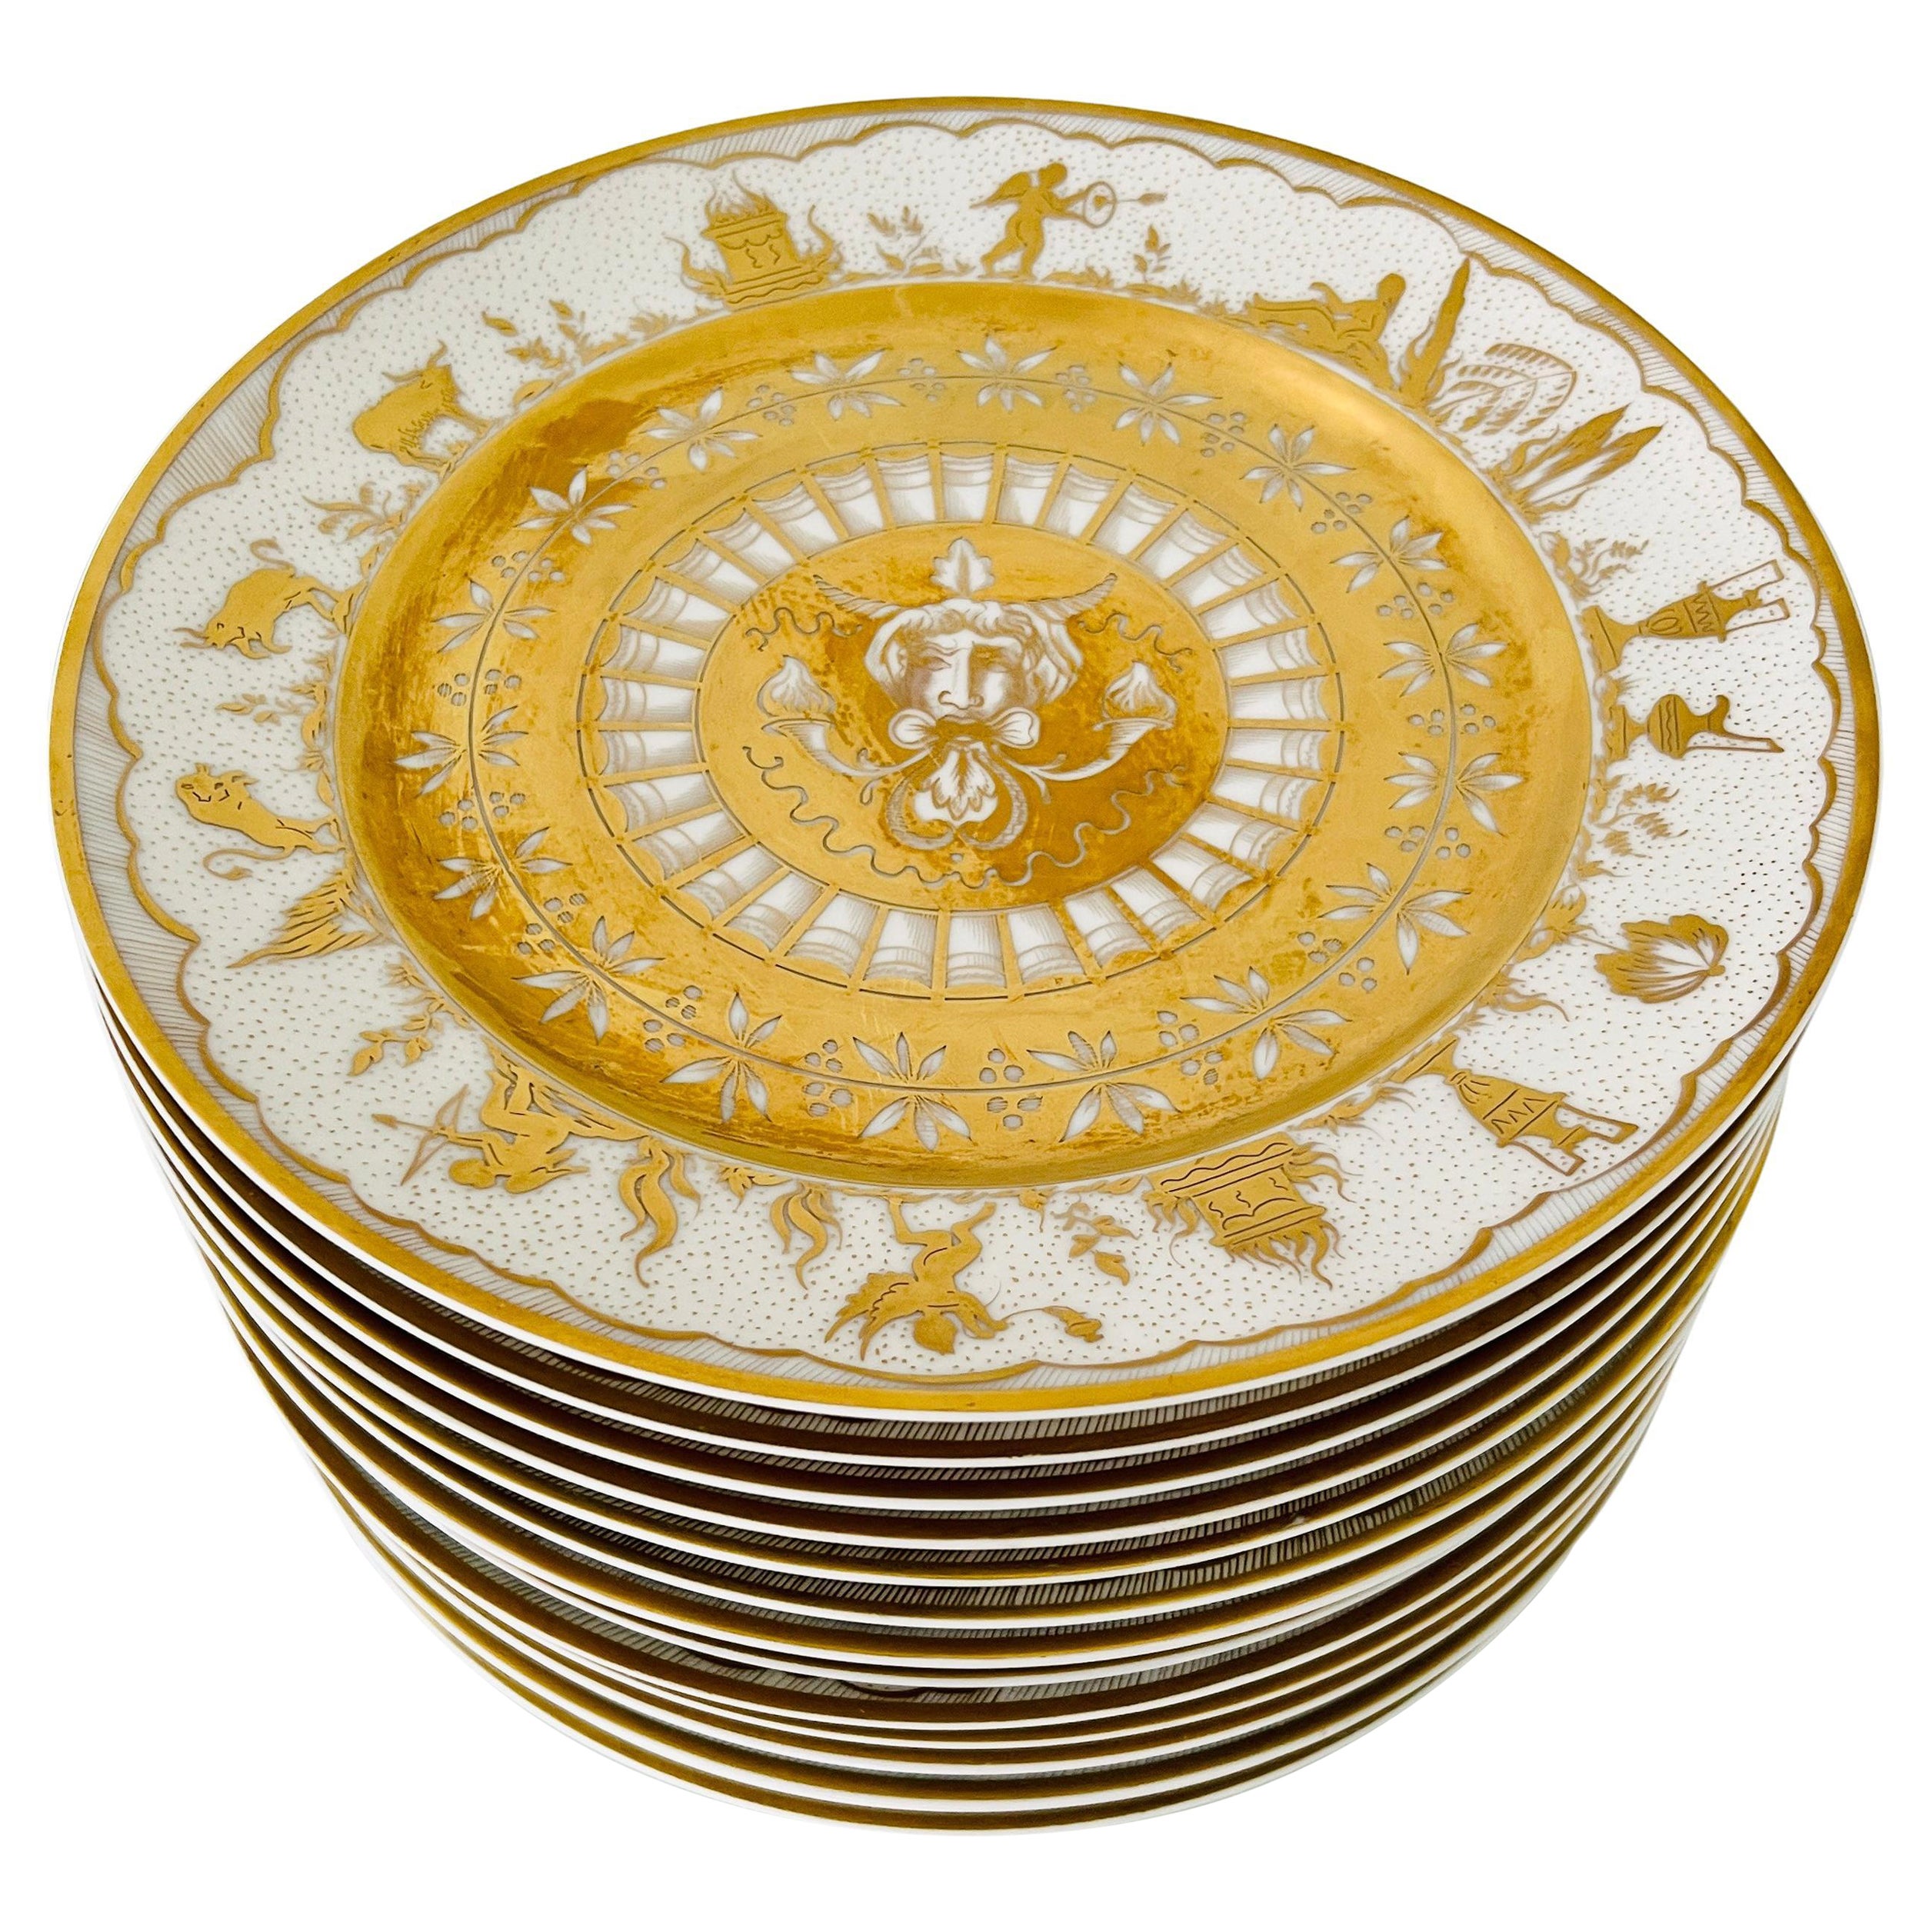 Le Tallec Handpainted Porcelain Plates with Gold Greek Mythology Motifs, Set/14 For Sale